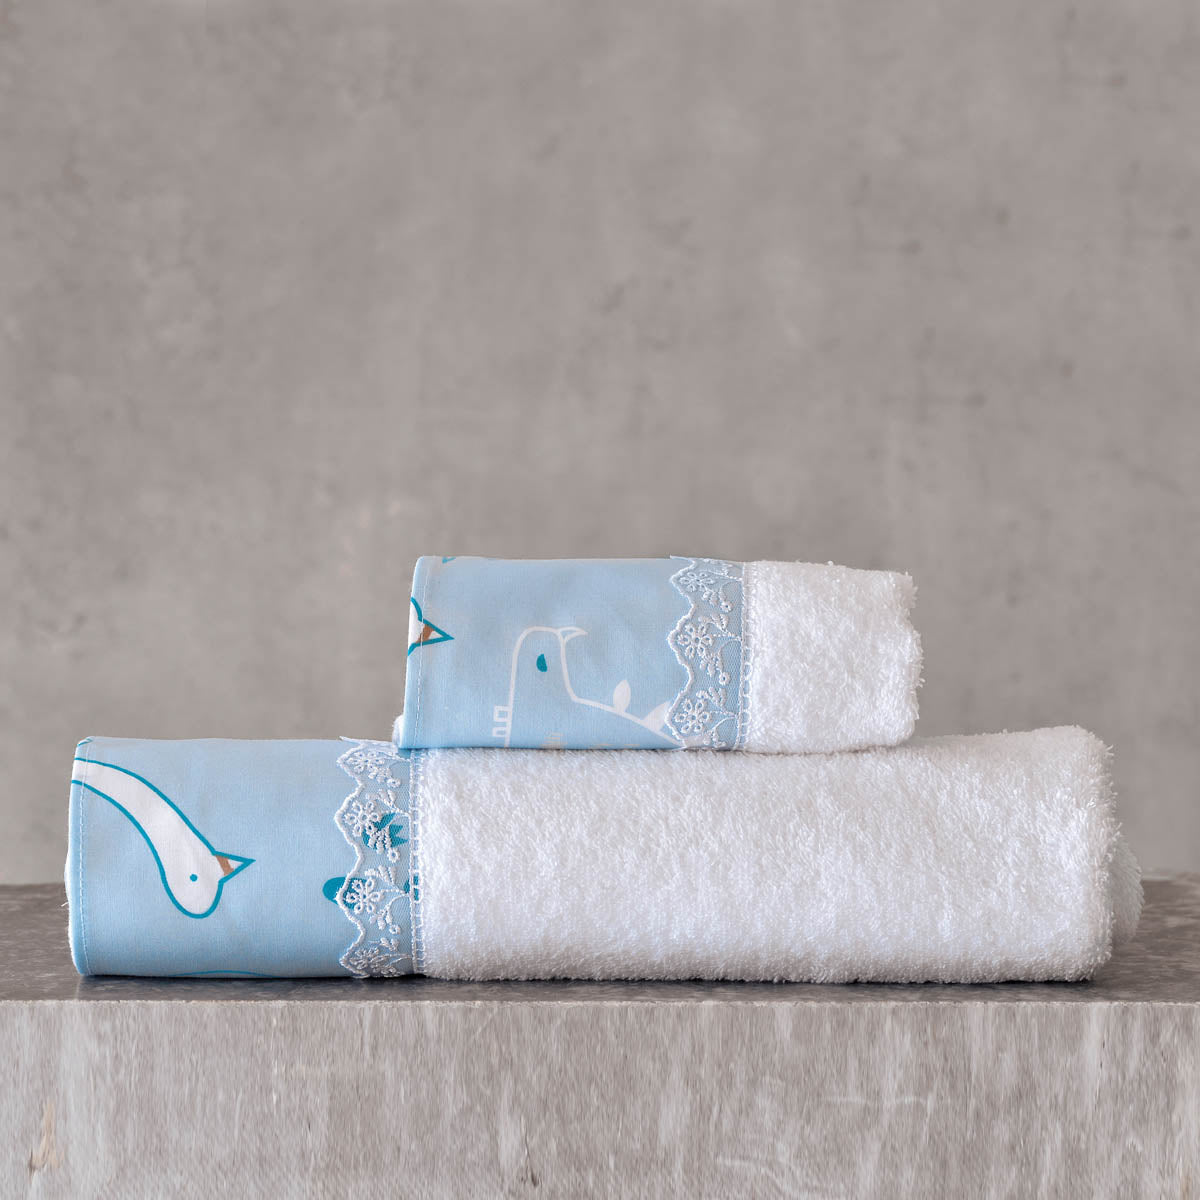 STOMP - Σετ πετσέτες 2 τεμ. Σετ 2 Τεμαχίων Σιέλ 30 x 50 70 x 140 από την εταιρεία Rythmos Home